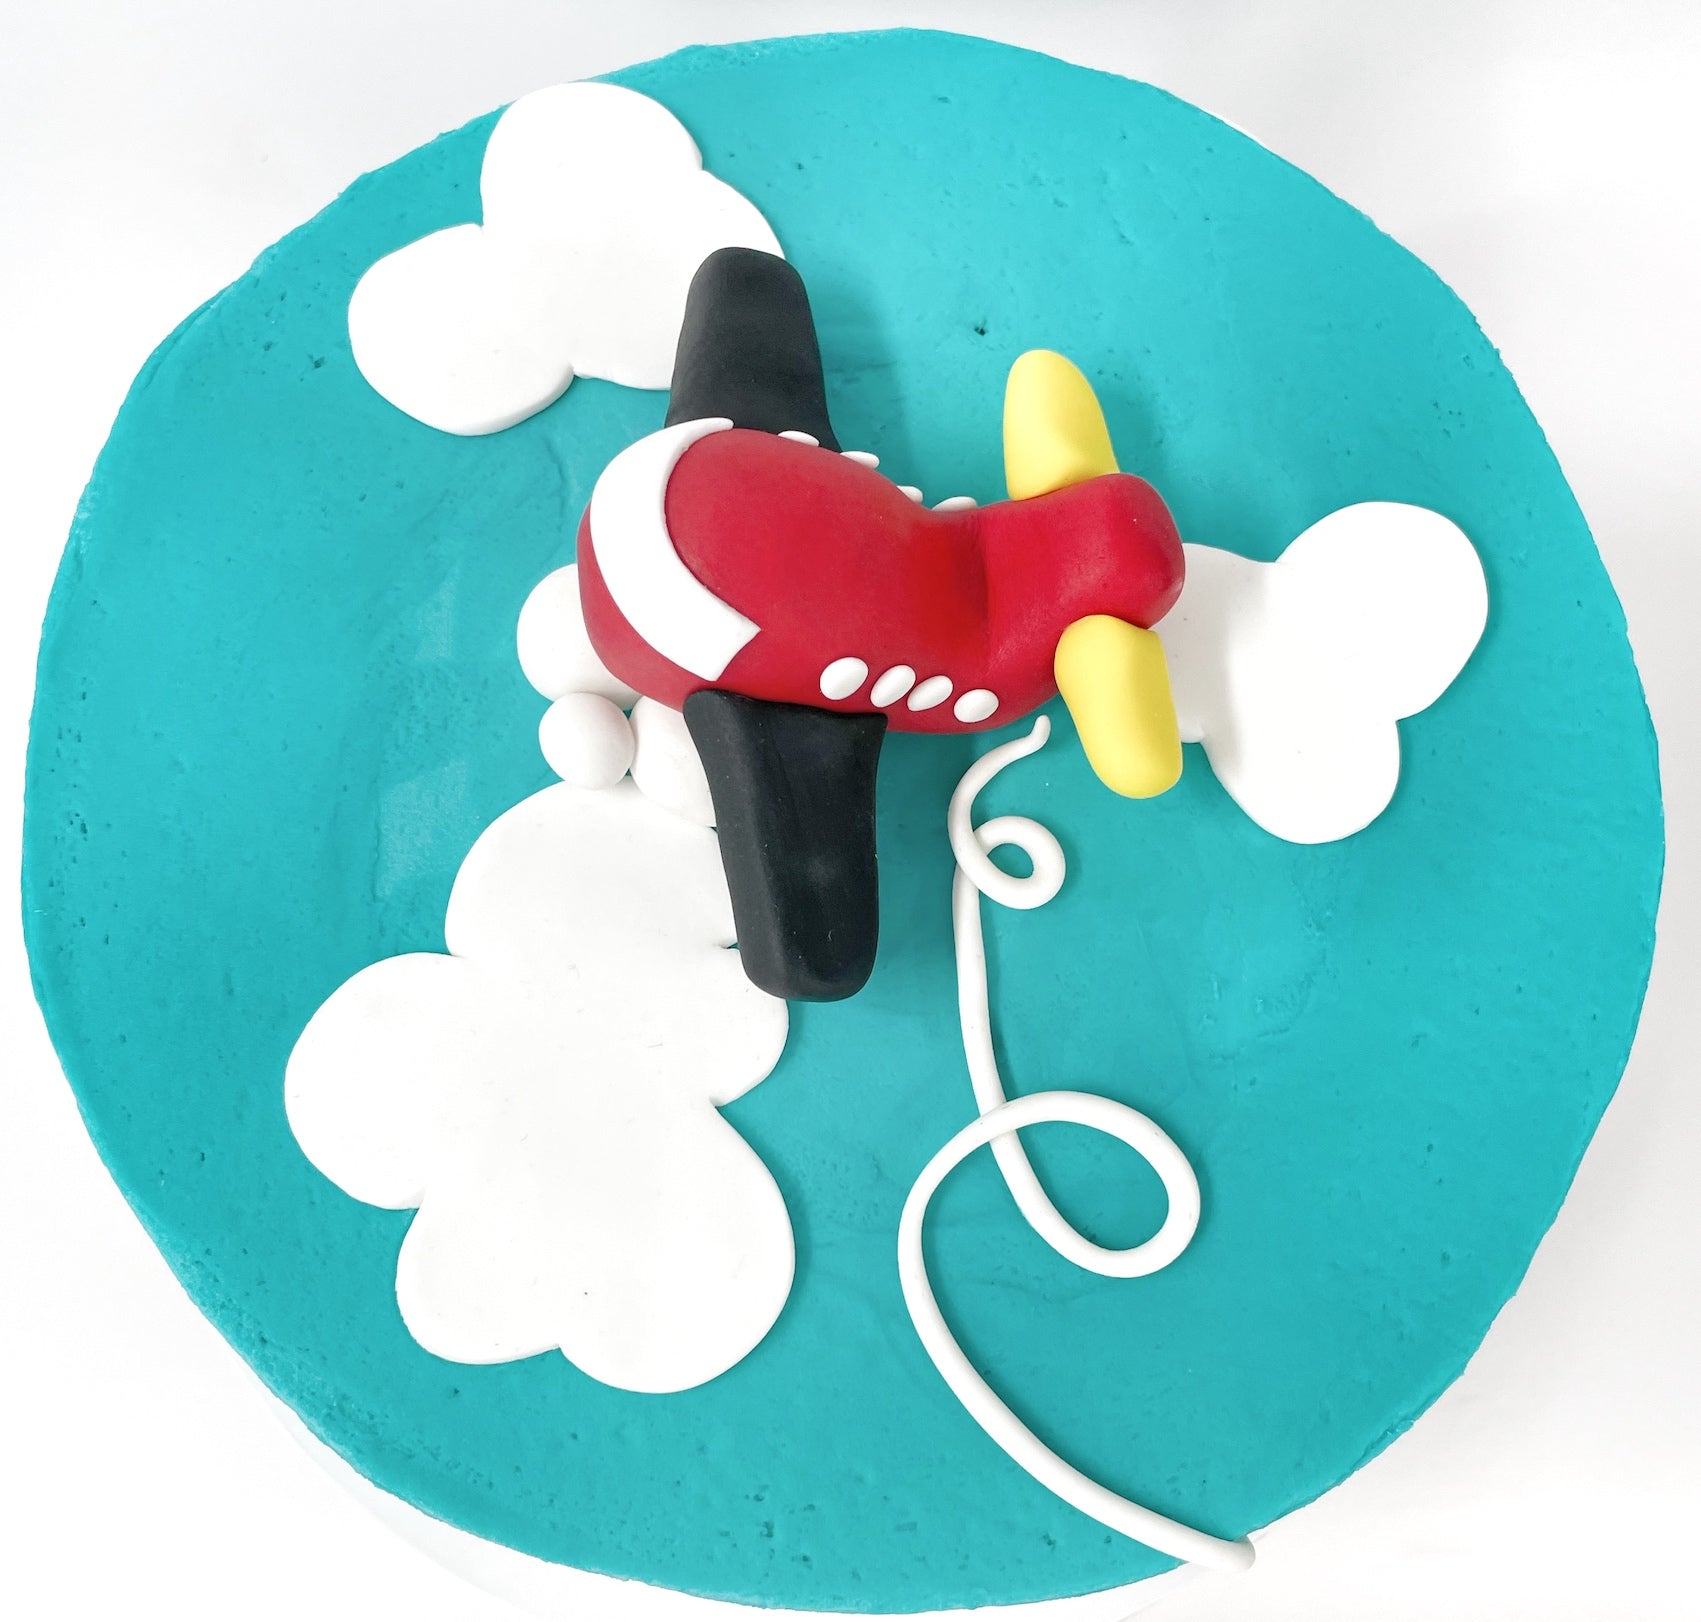 Plane DIY Cake Kit, Sky Cake, Aeroplane Cake Kit, Plane Party Cake, The Best Plane Cake. Fly Away, Travel Cake.